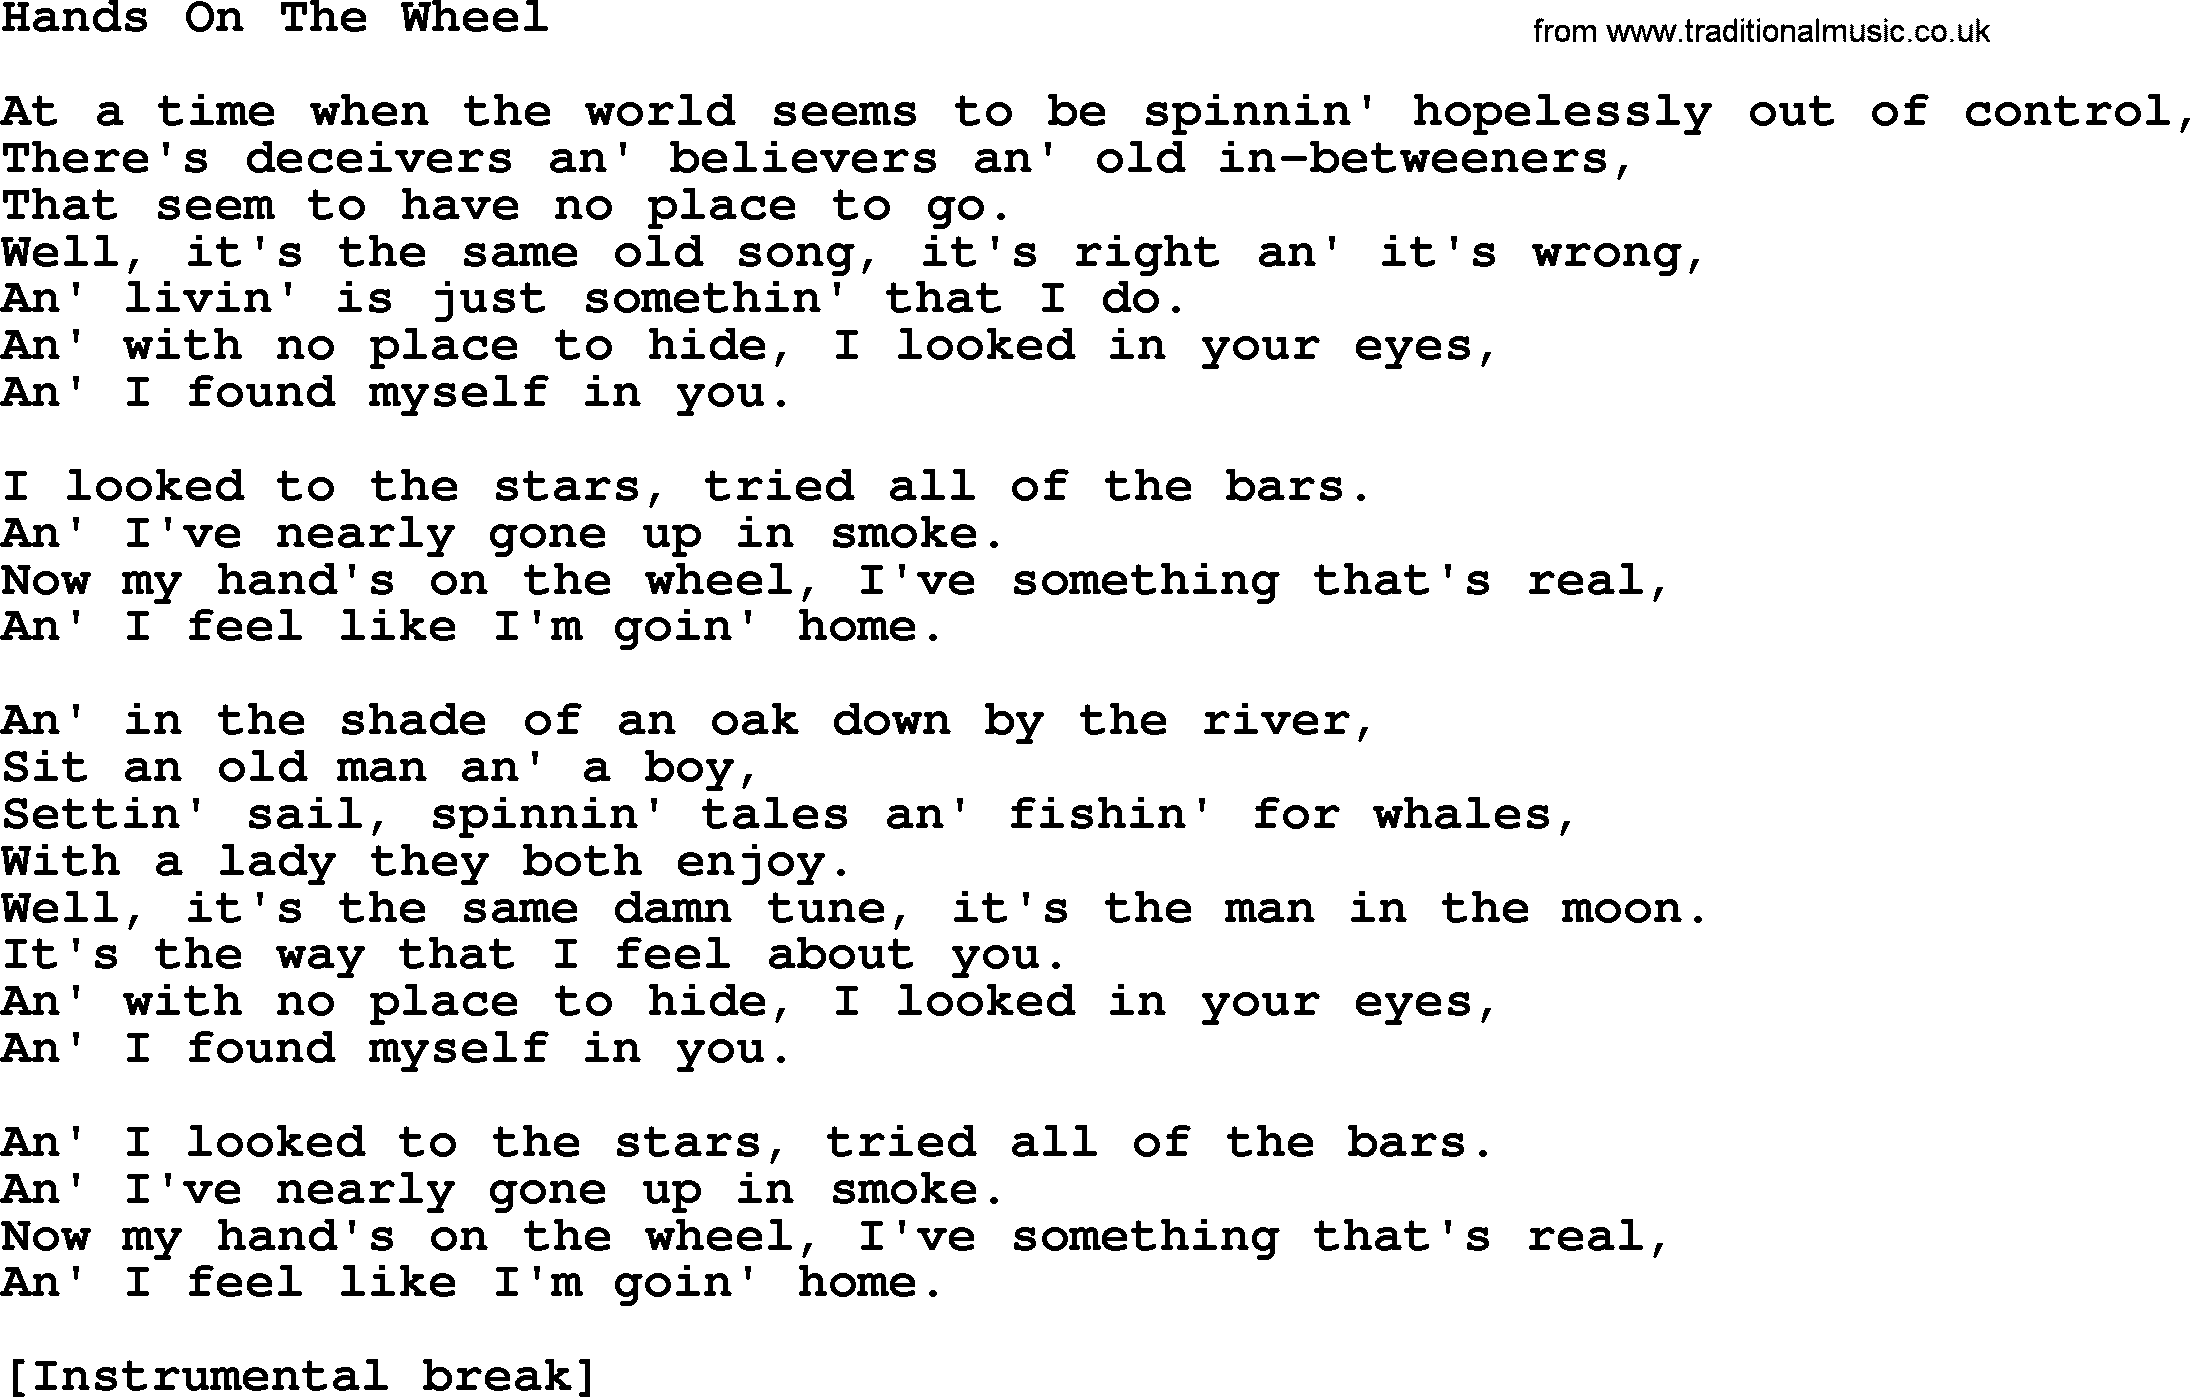 Willie Nelson song: Hands On The Wheel lyrics